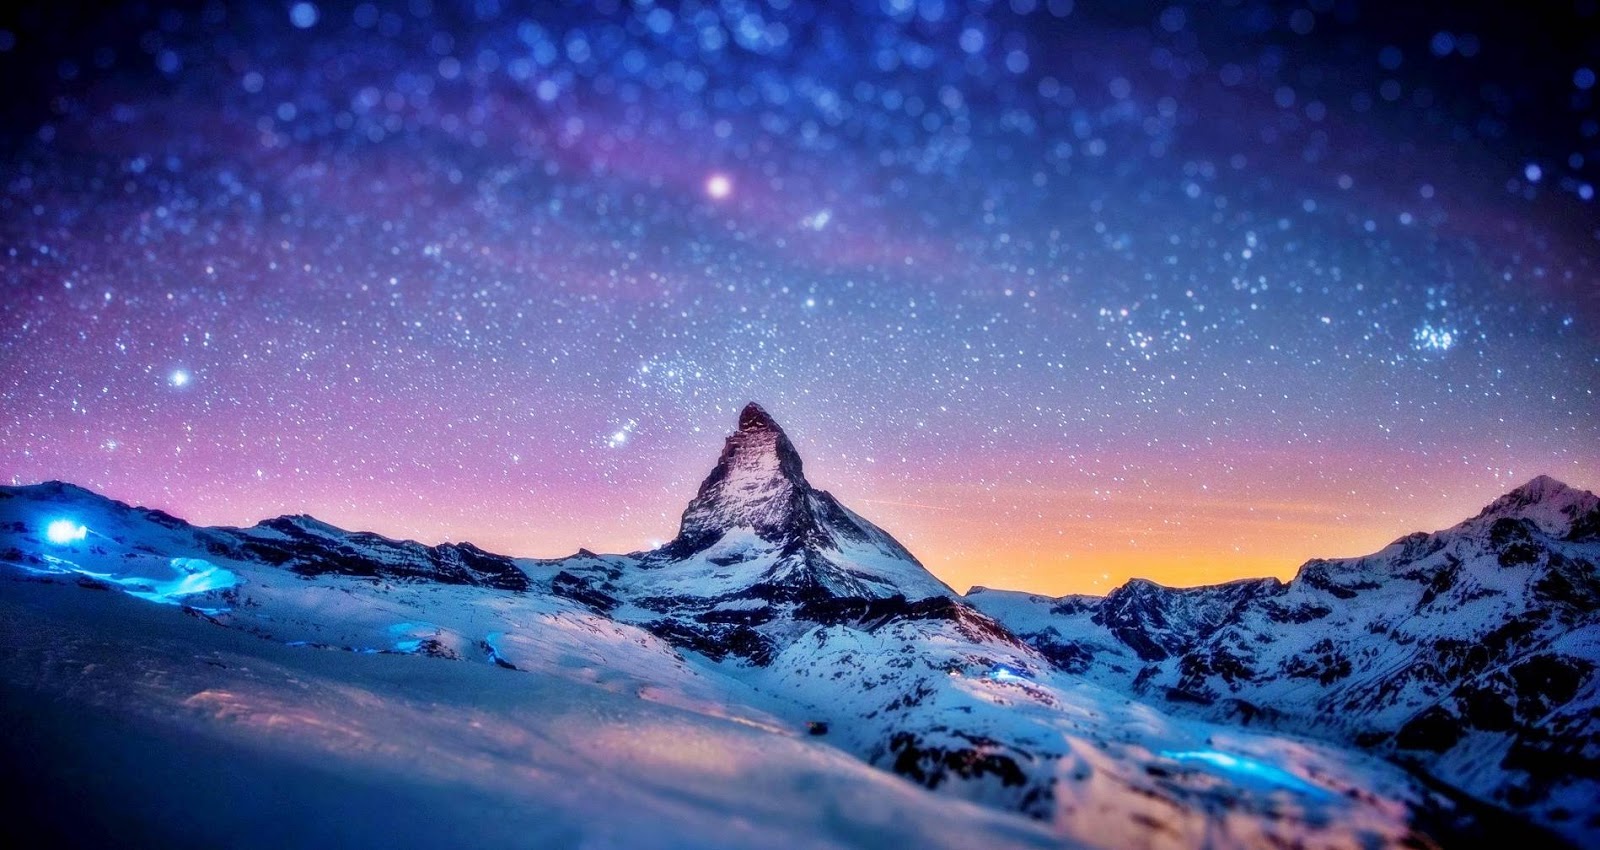 Snow Mountain in night